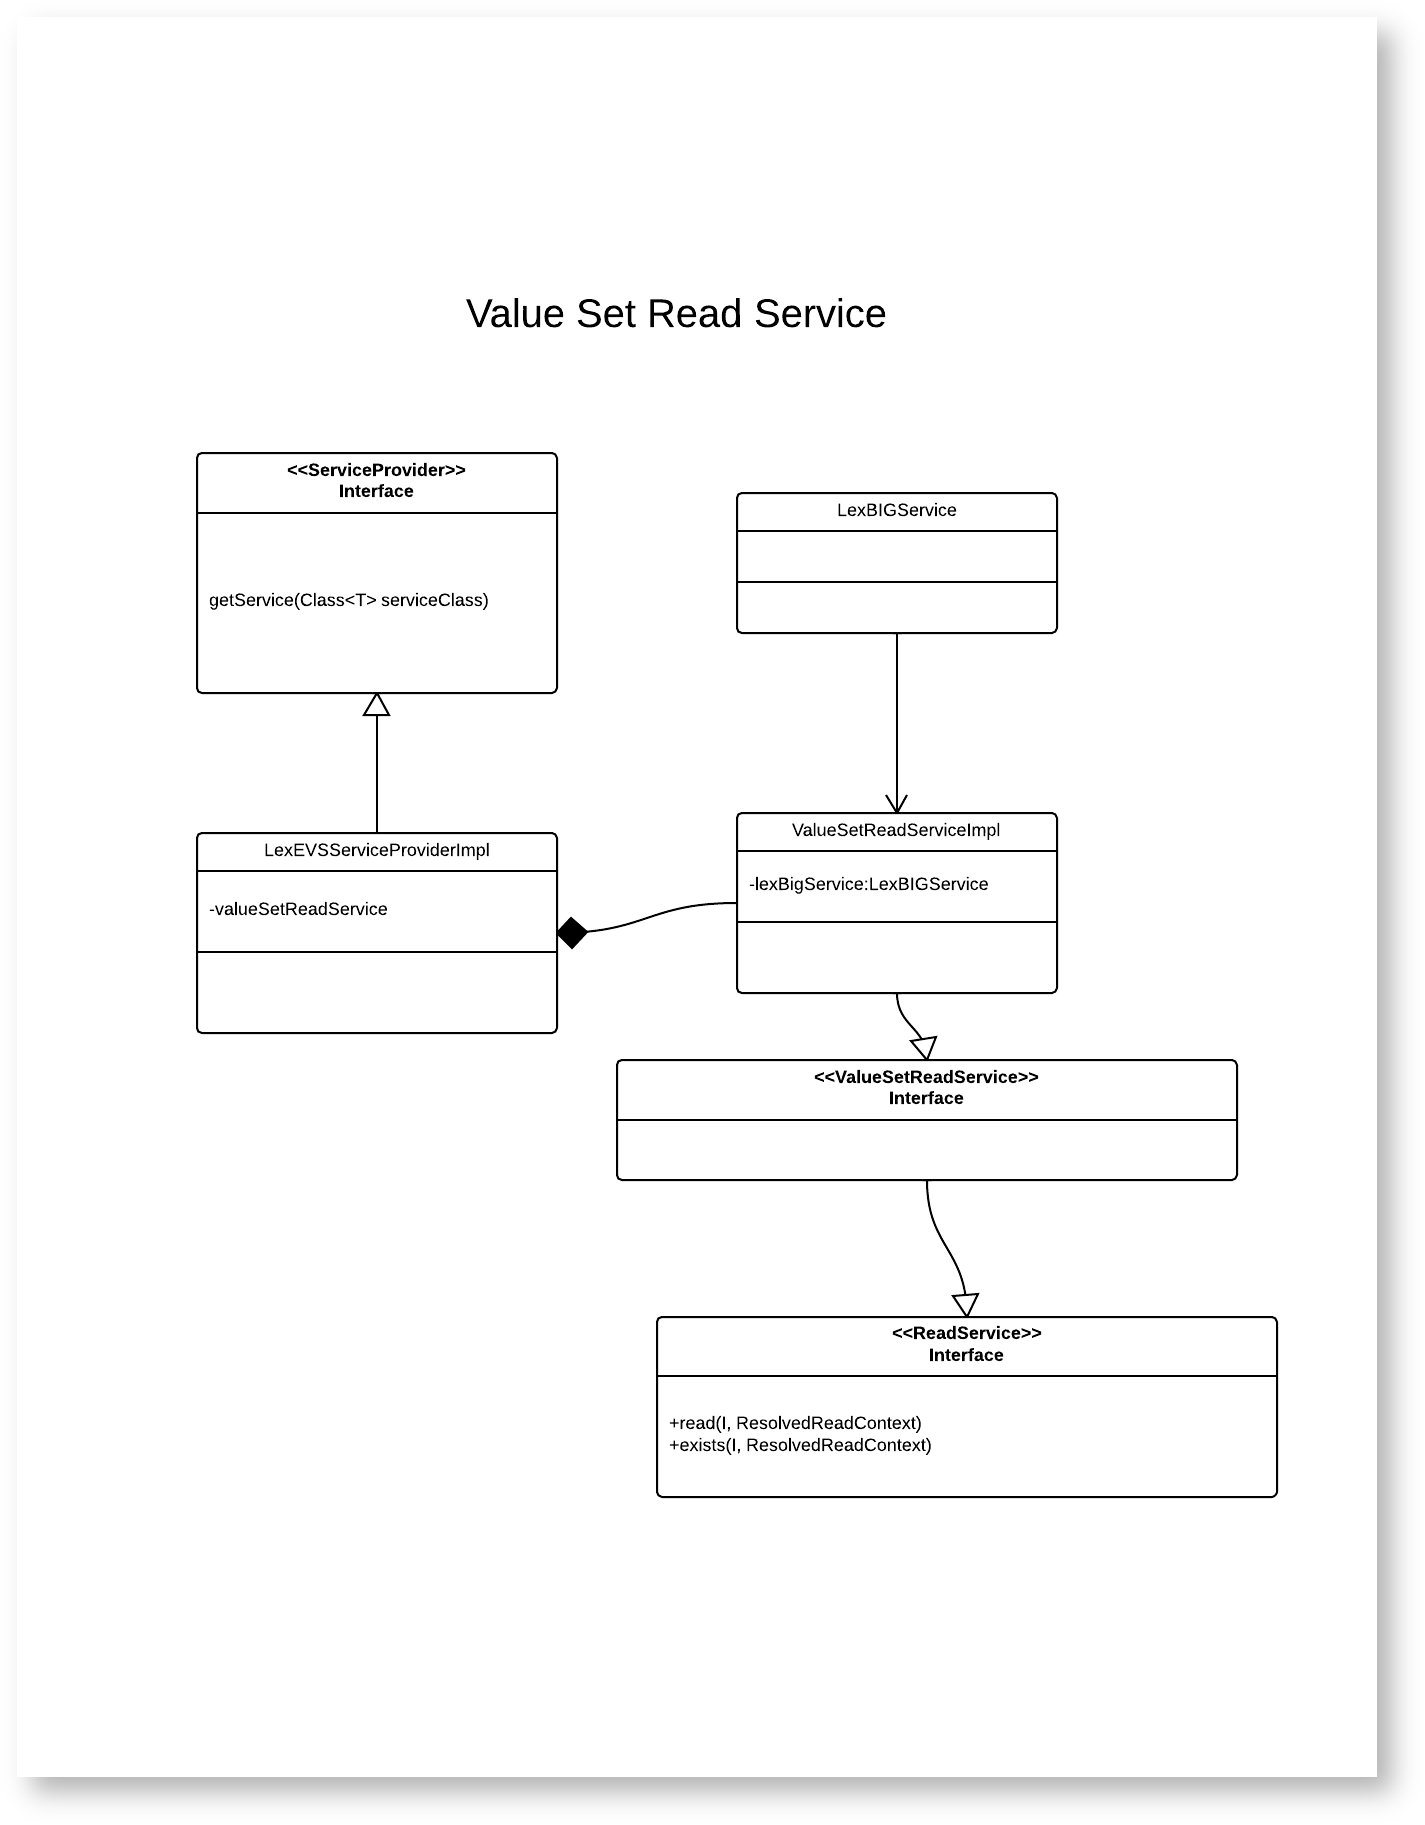 Value set read service diagram